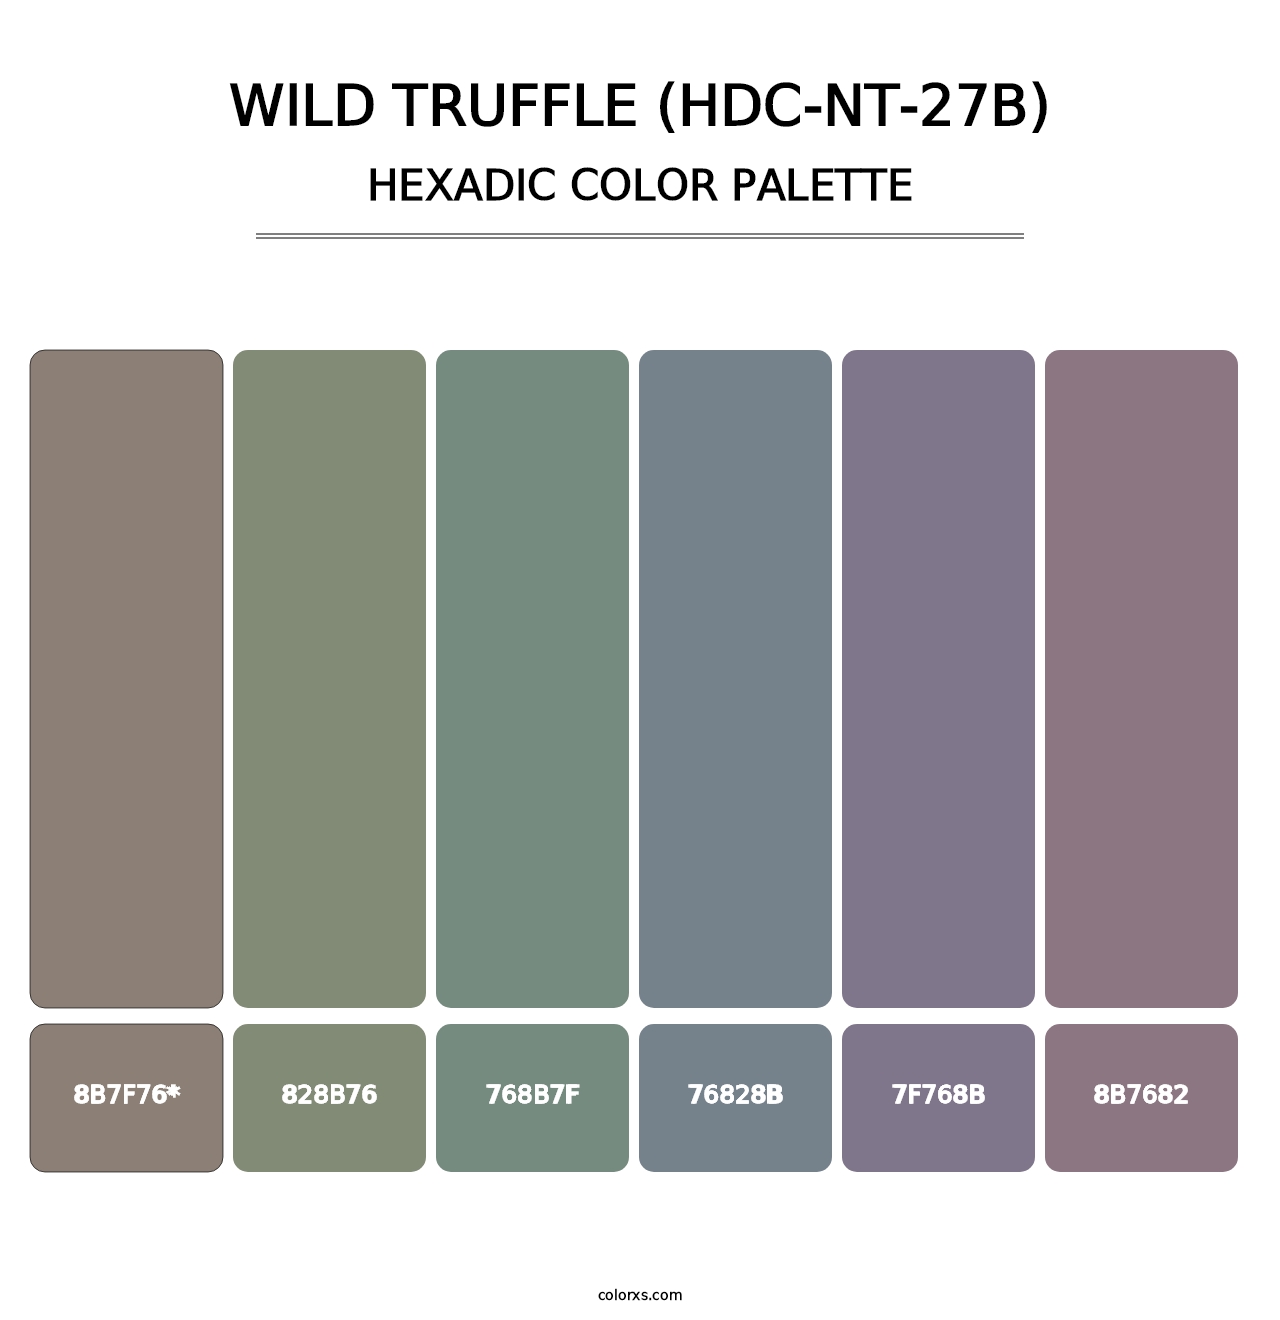 Wild Truffle (HDC-NT-27B) - Hexadic Color Palette